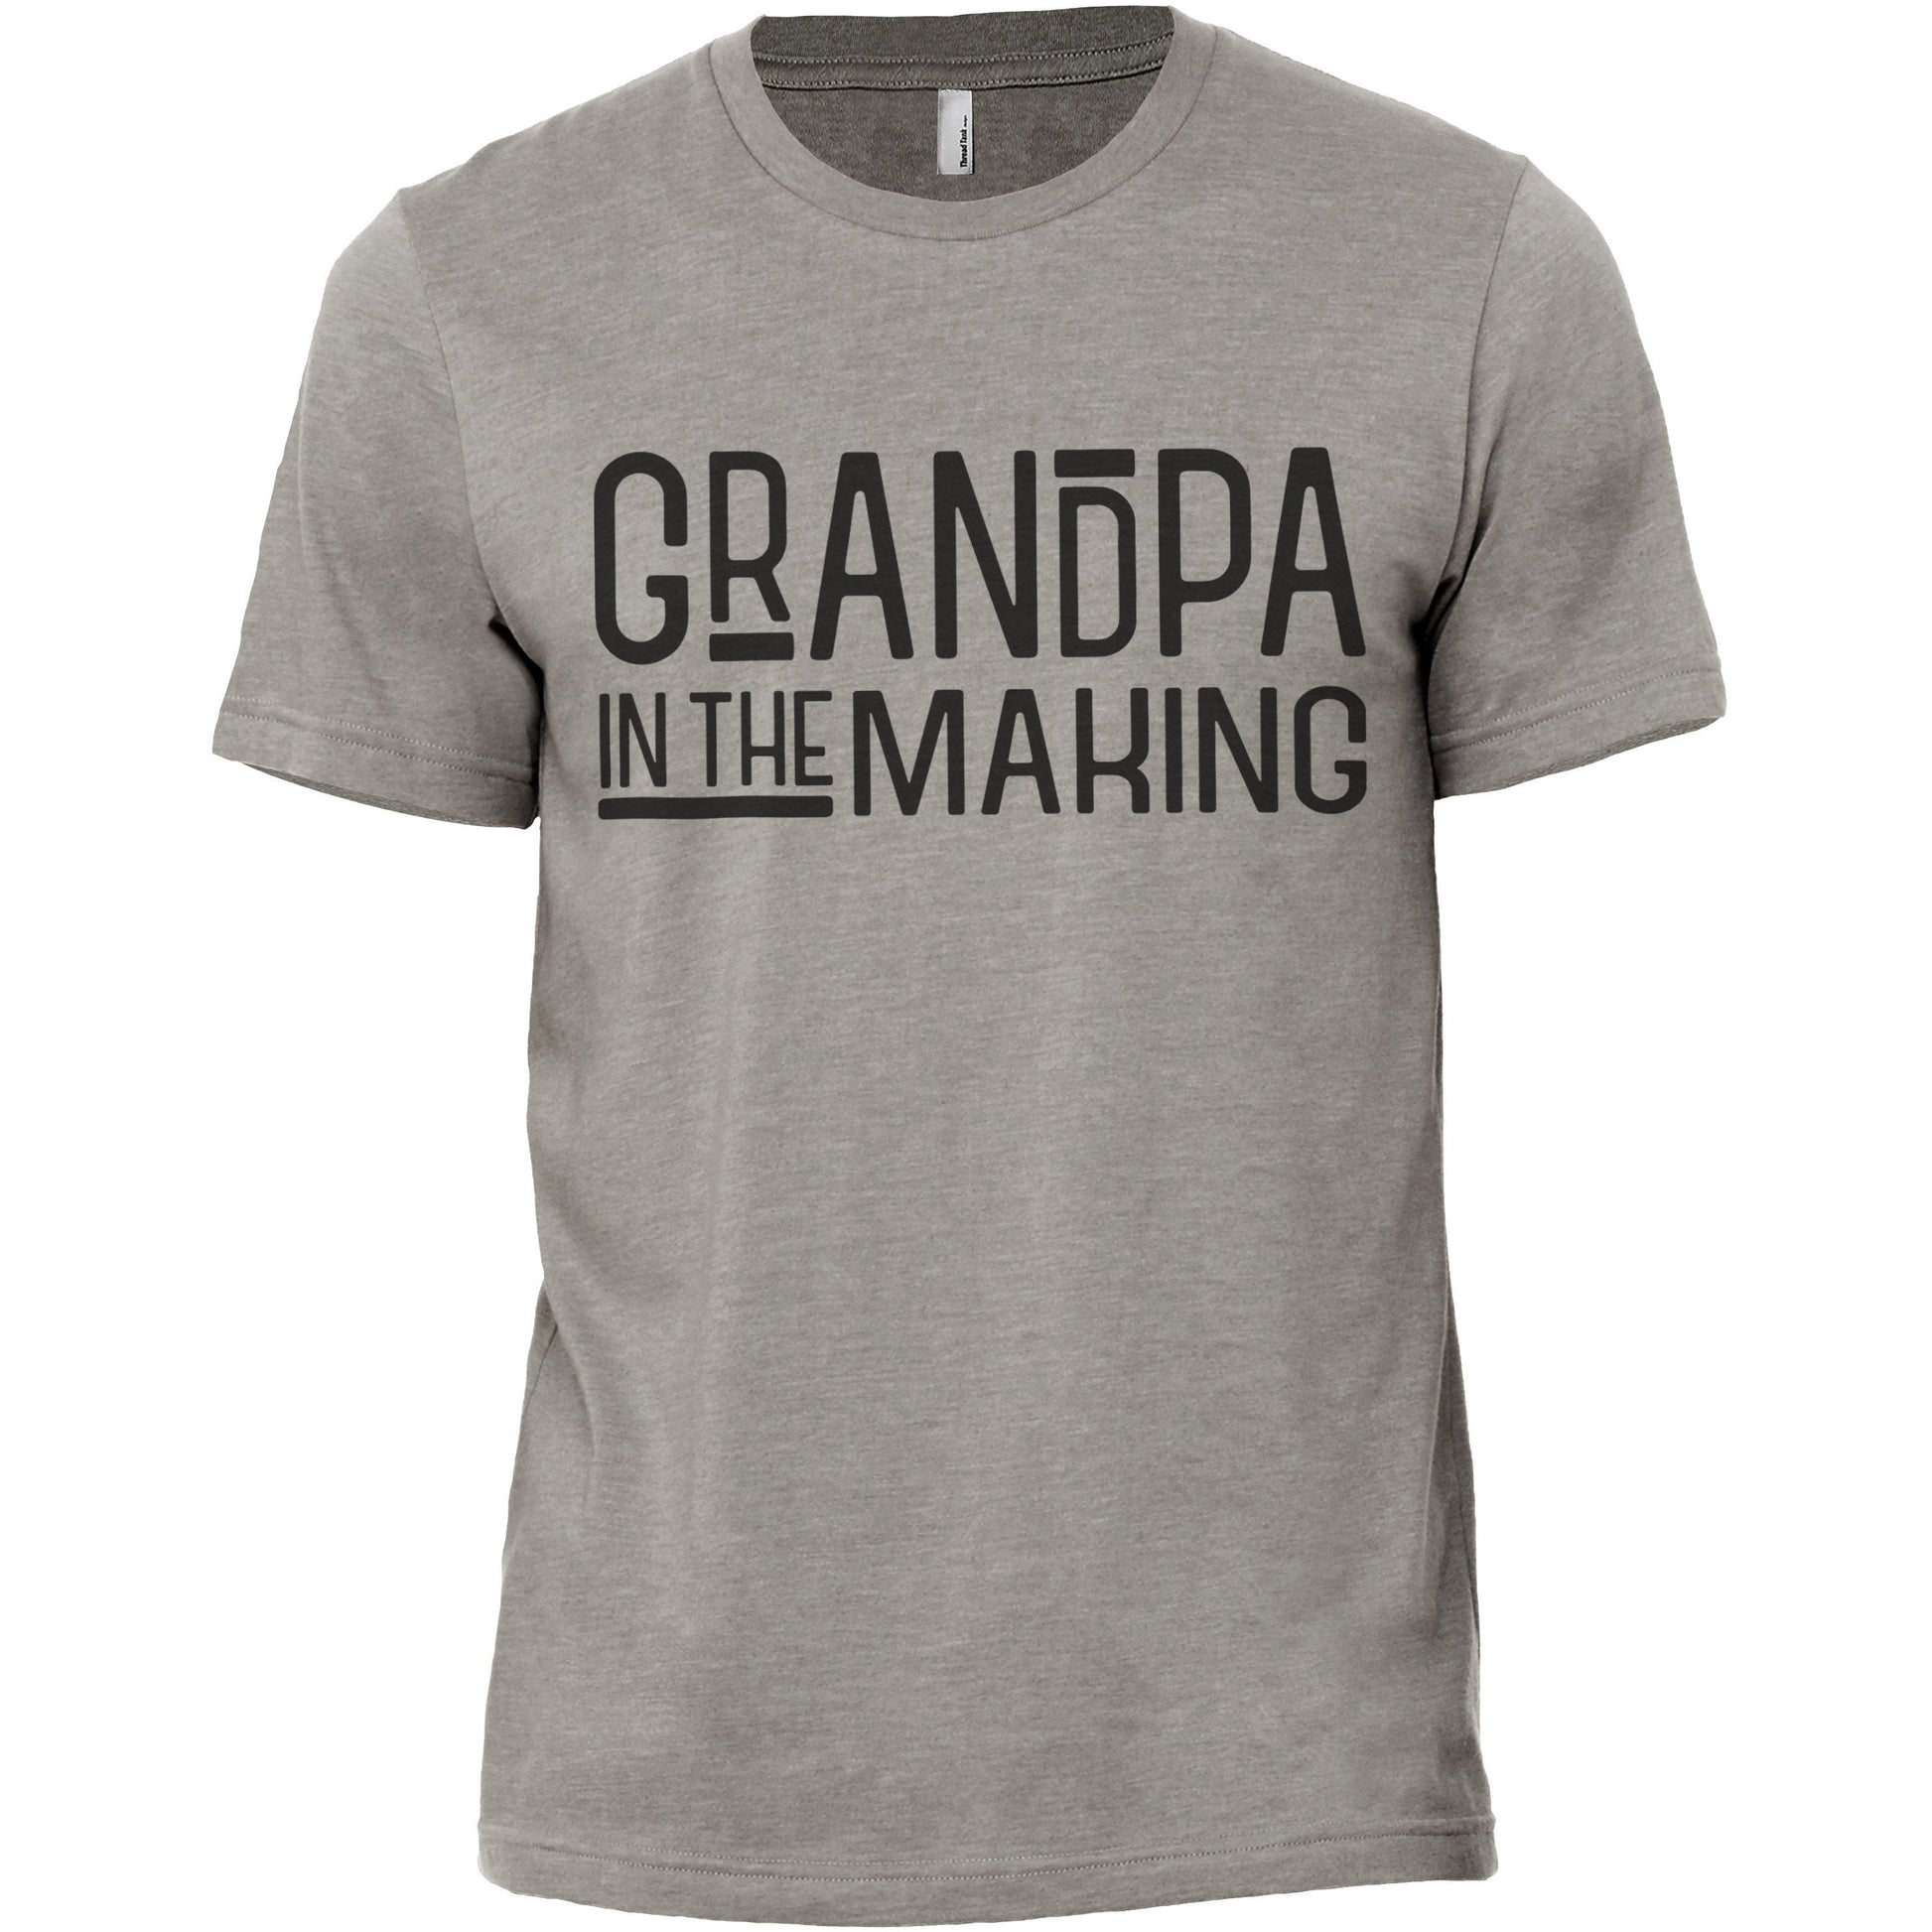 Grandpa In The Making Military Grey Printed Graphic Men's Crew T-Shirt Tee